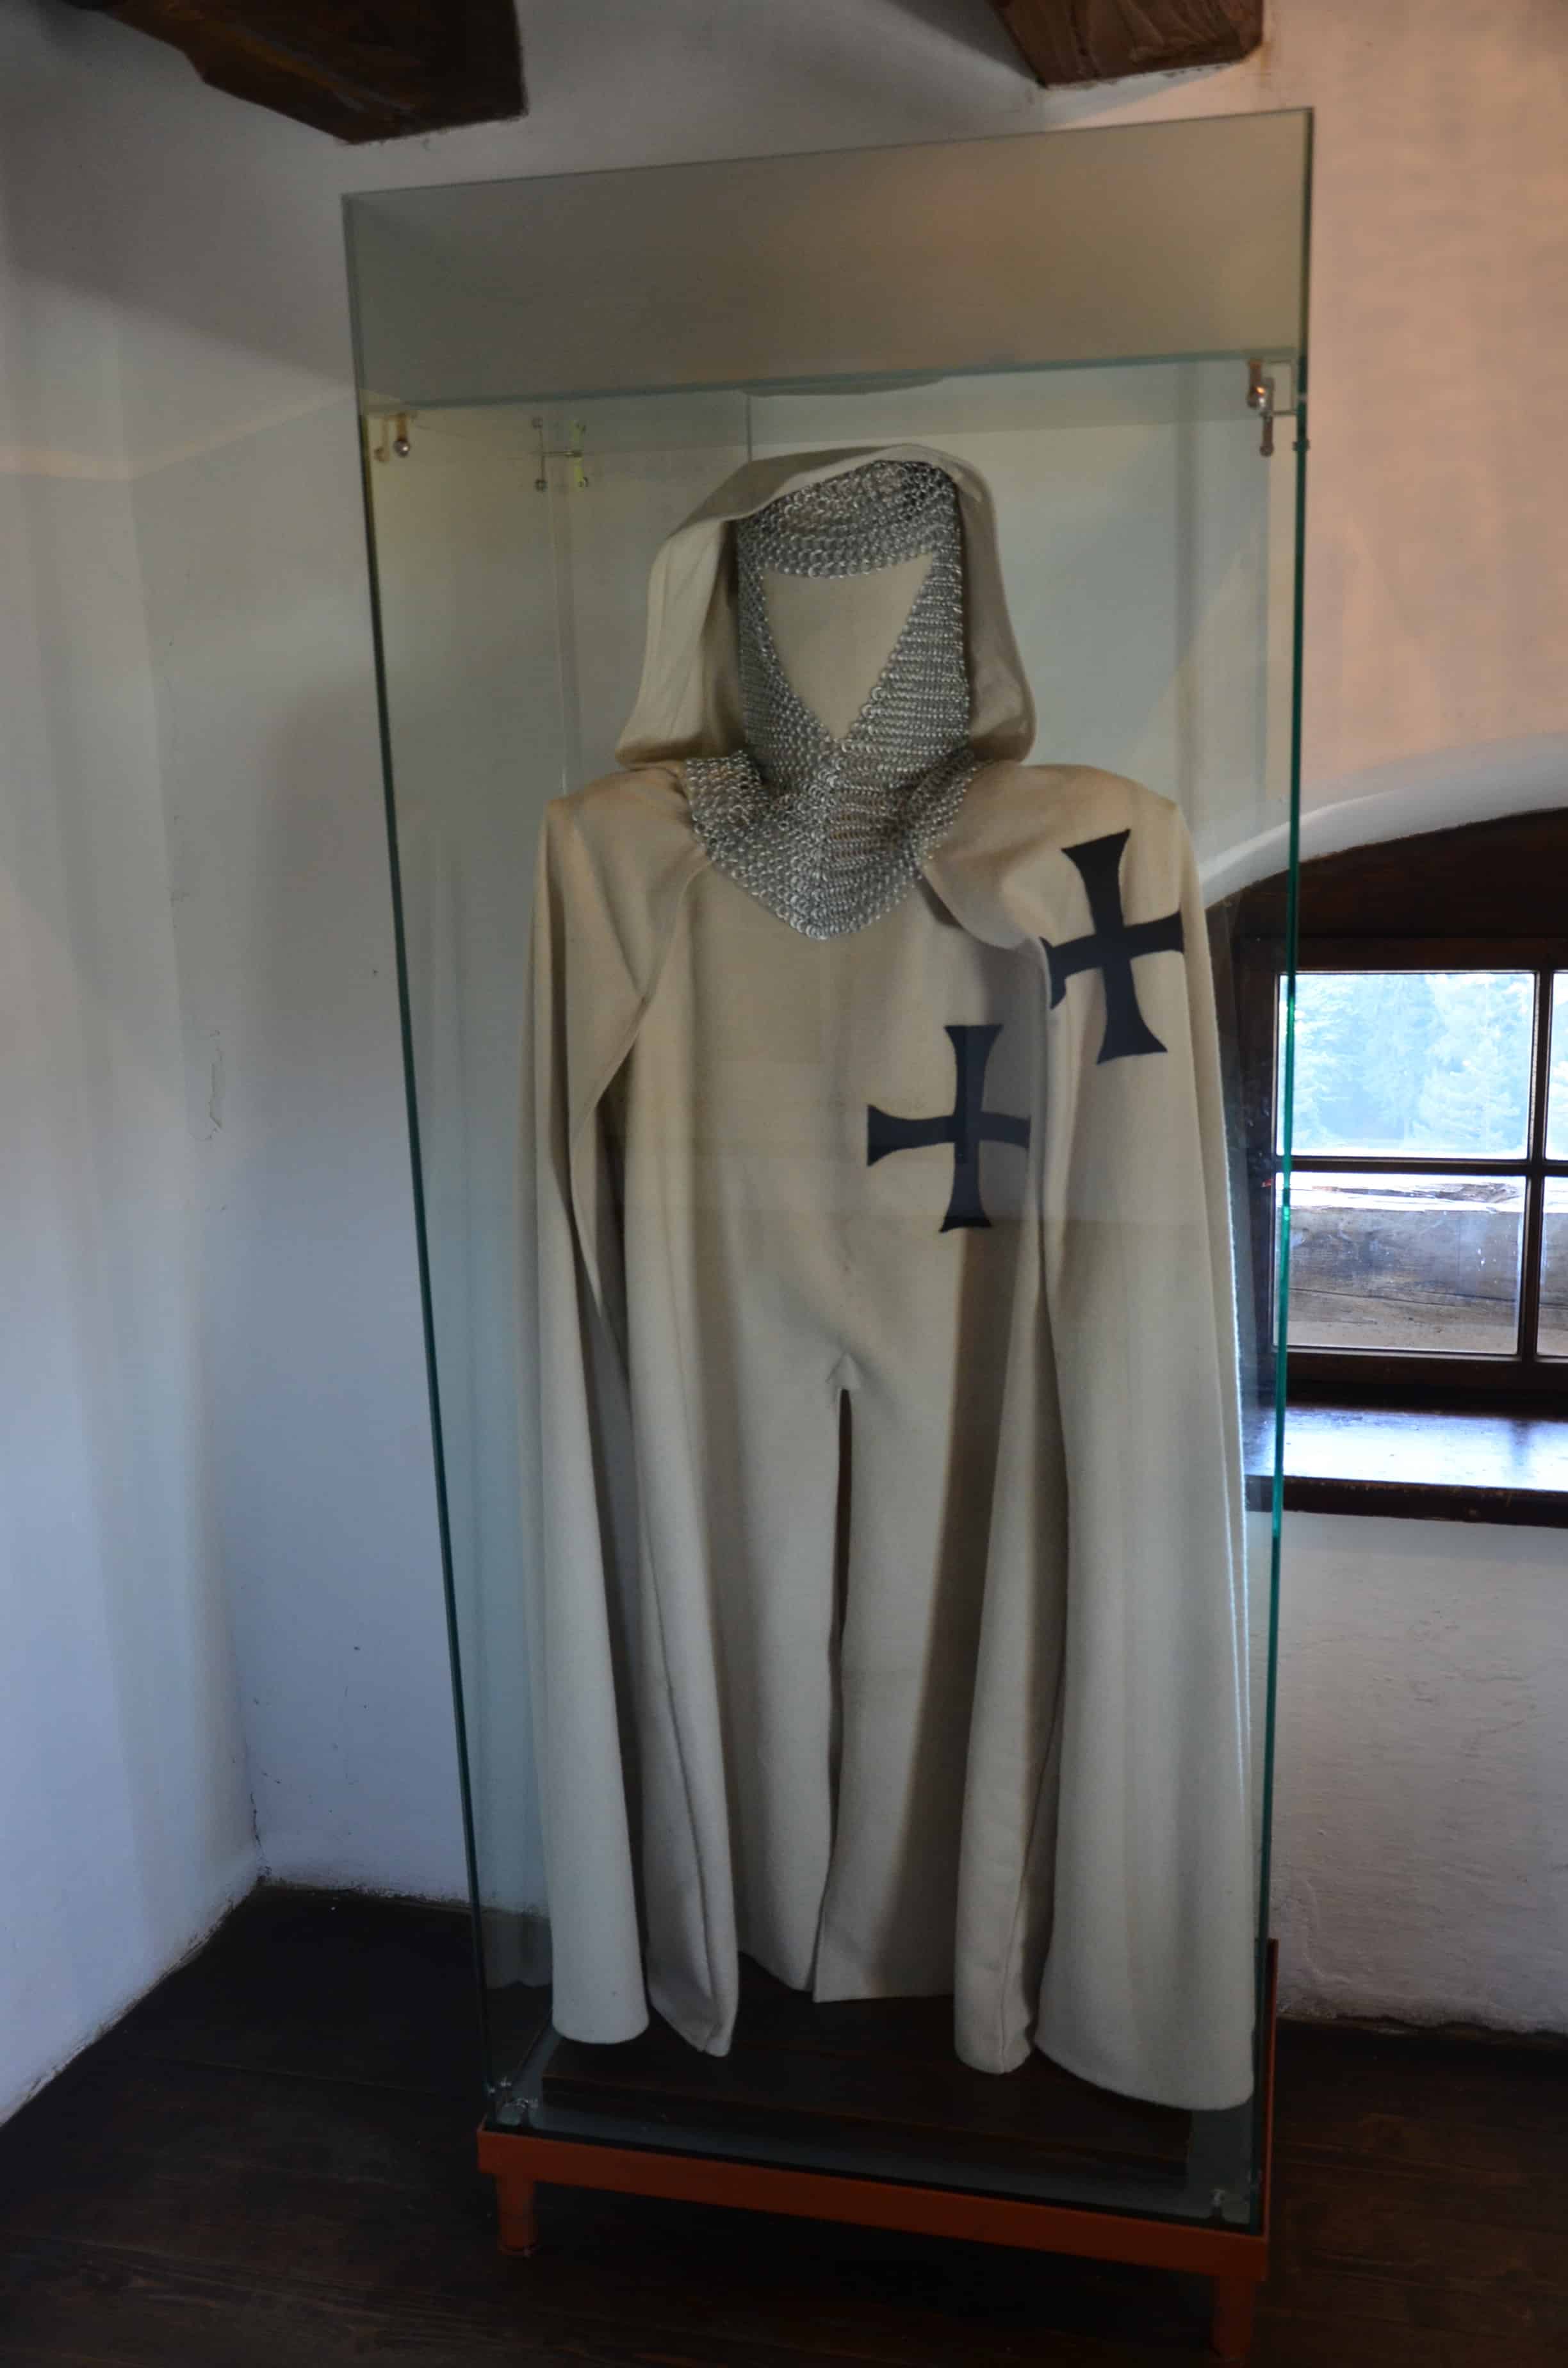 Teutonic knight costume at Bran Castle in Bran, Romania